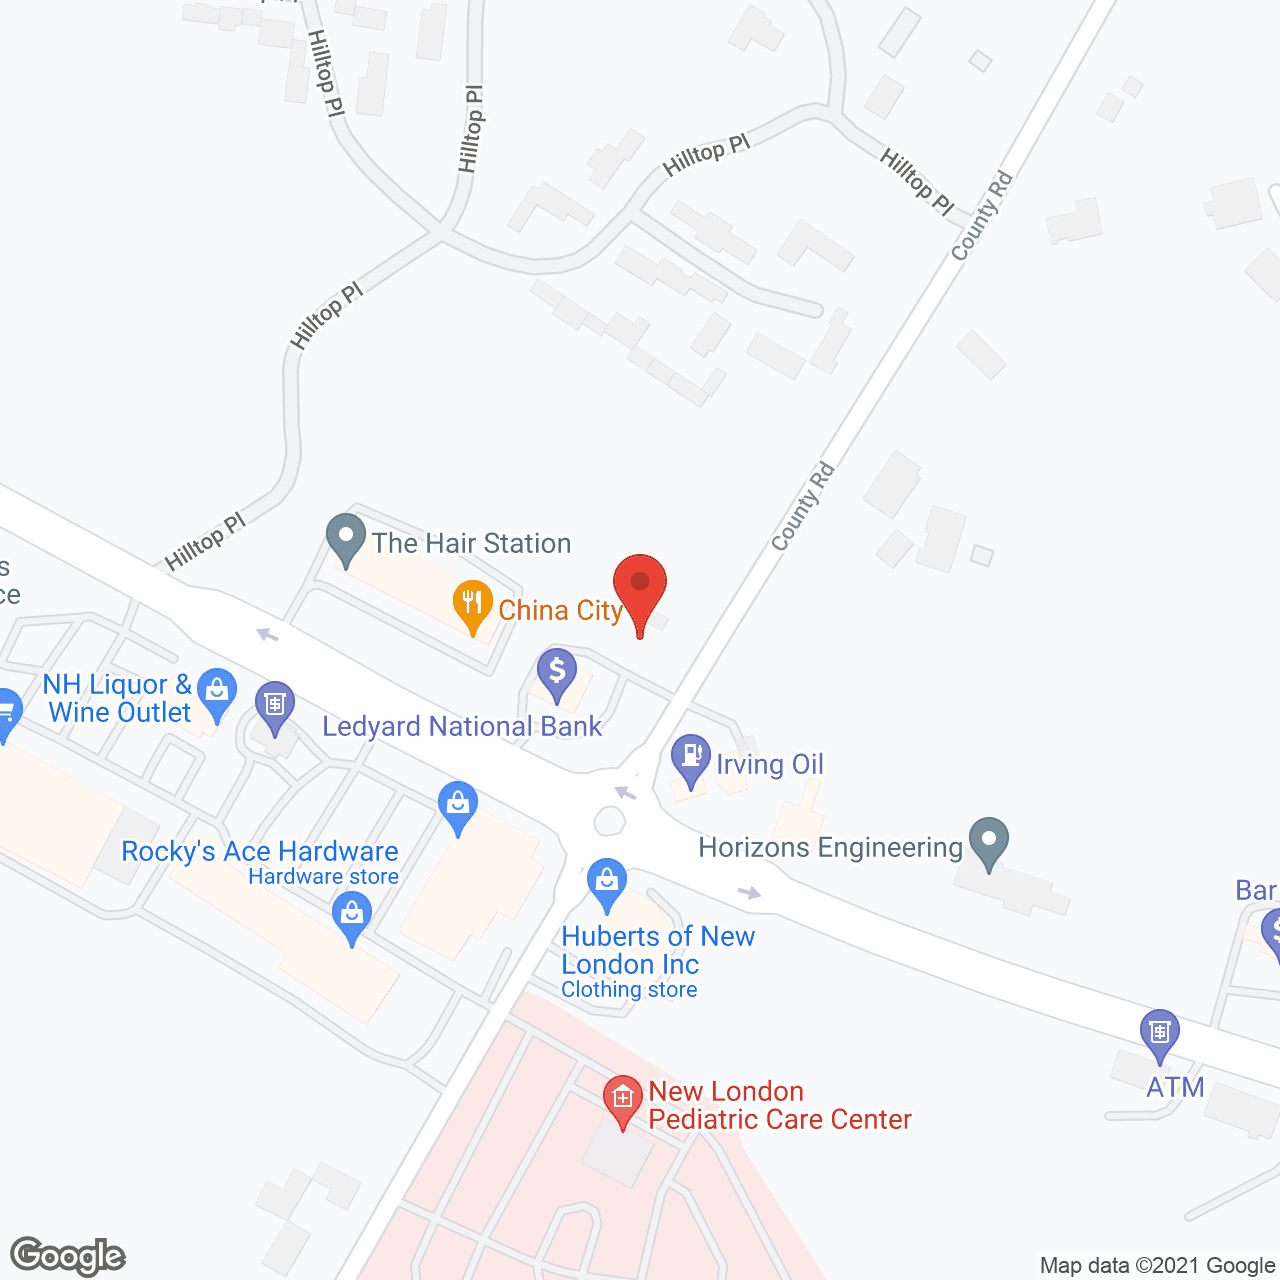 Clough Center in google map